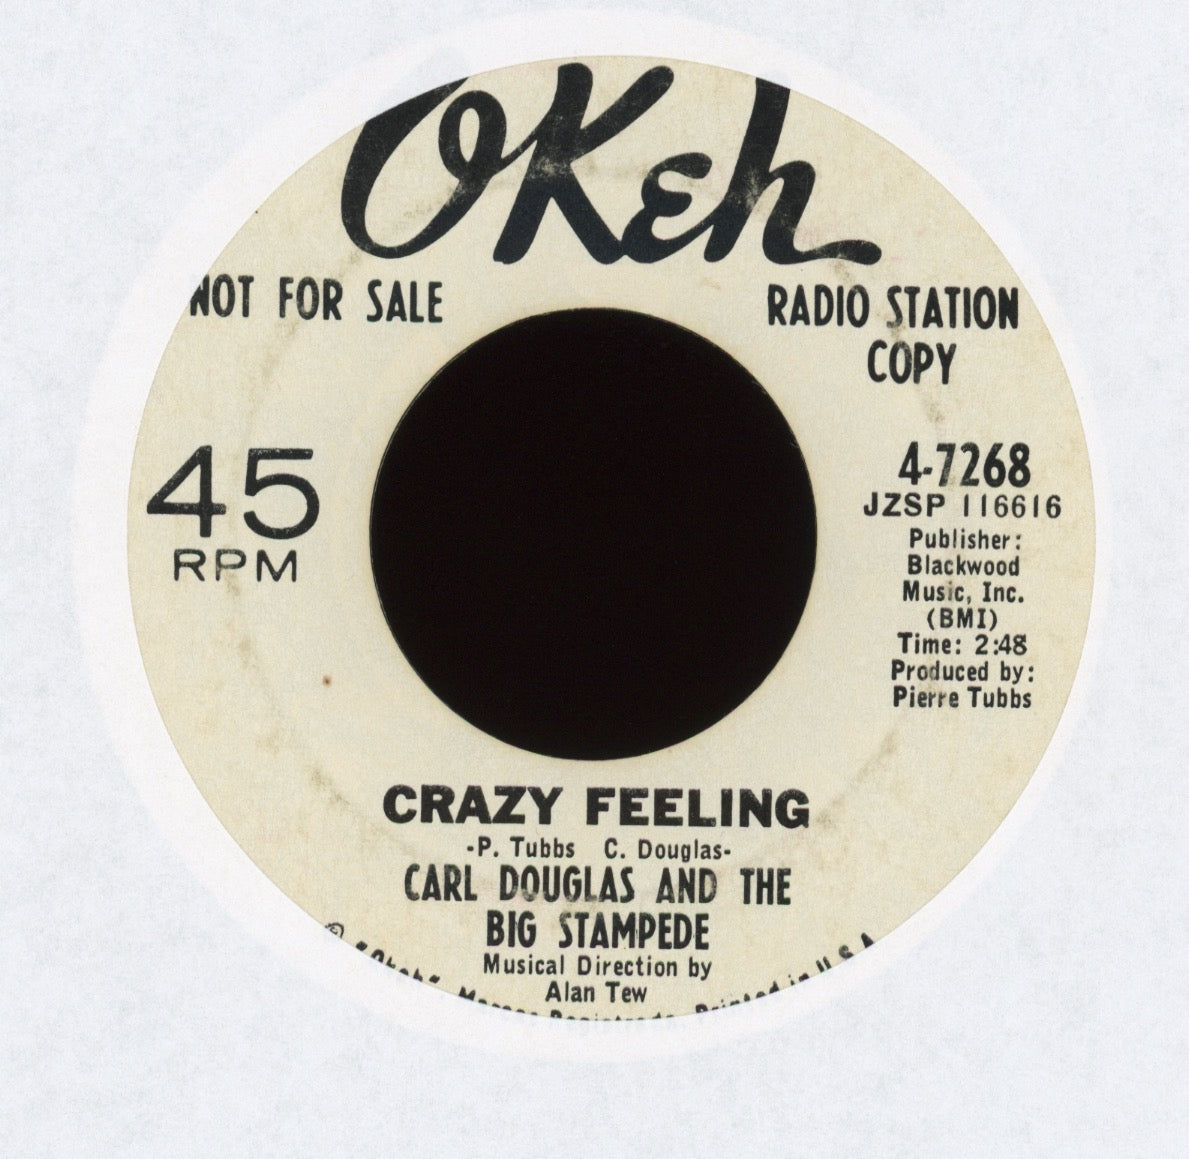 Carl Douglas & The Big Stampede - Crazy Feeling on Okeh Promo